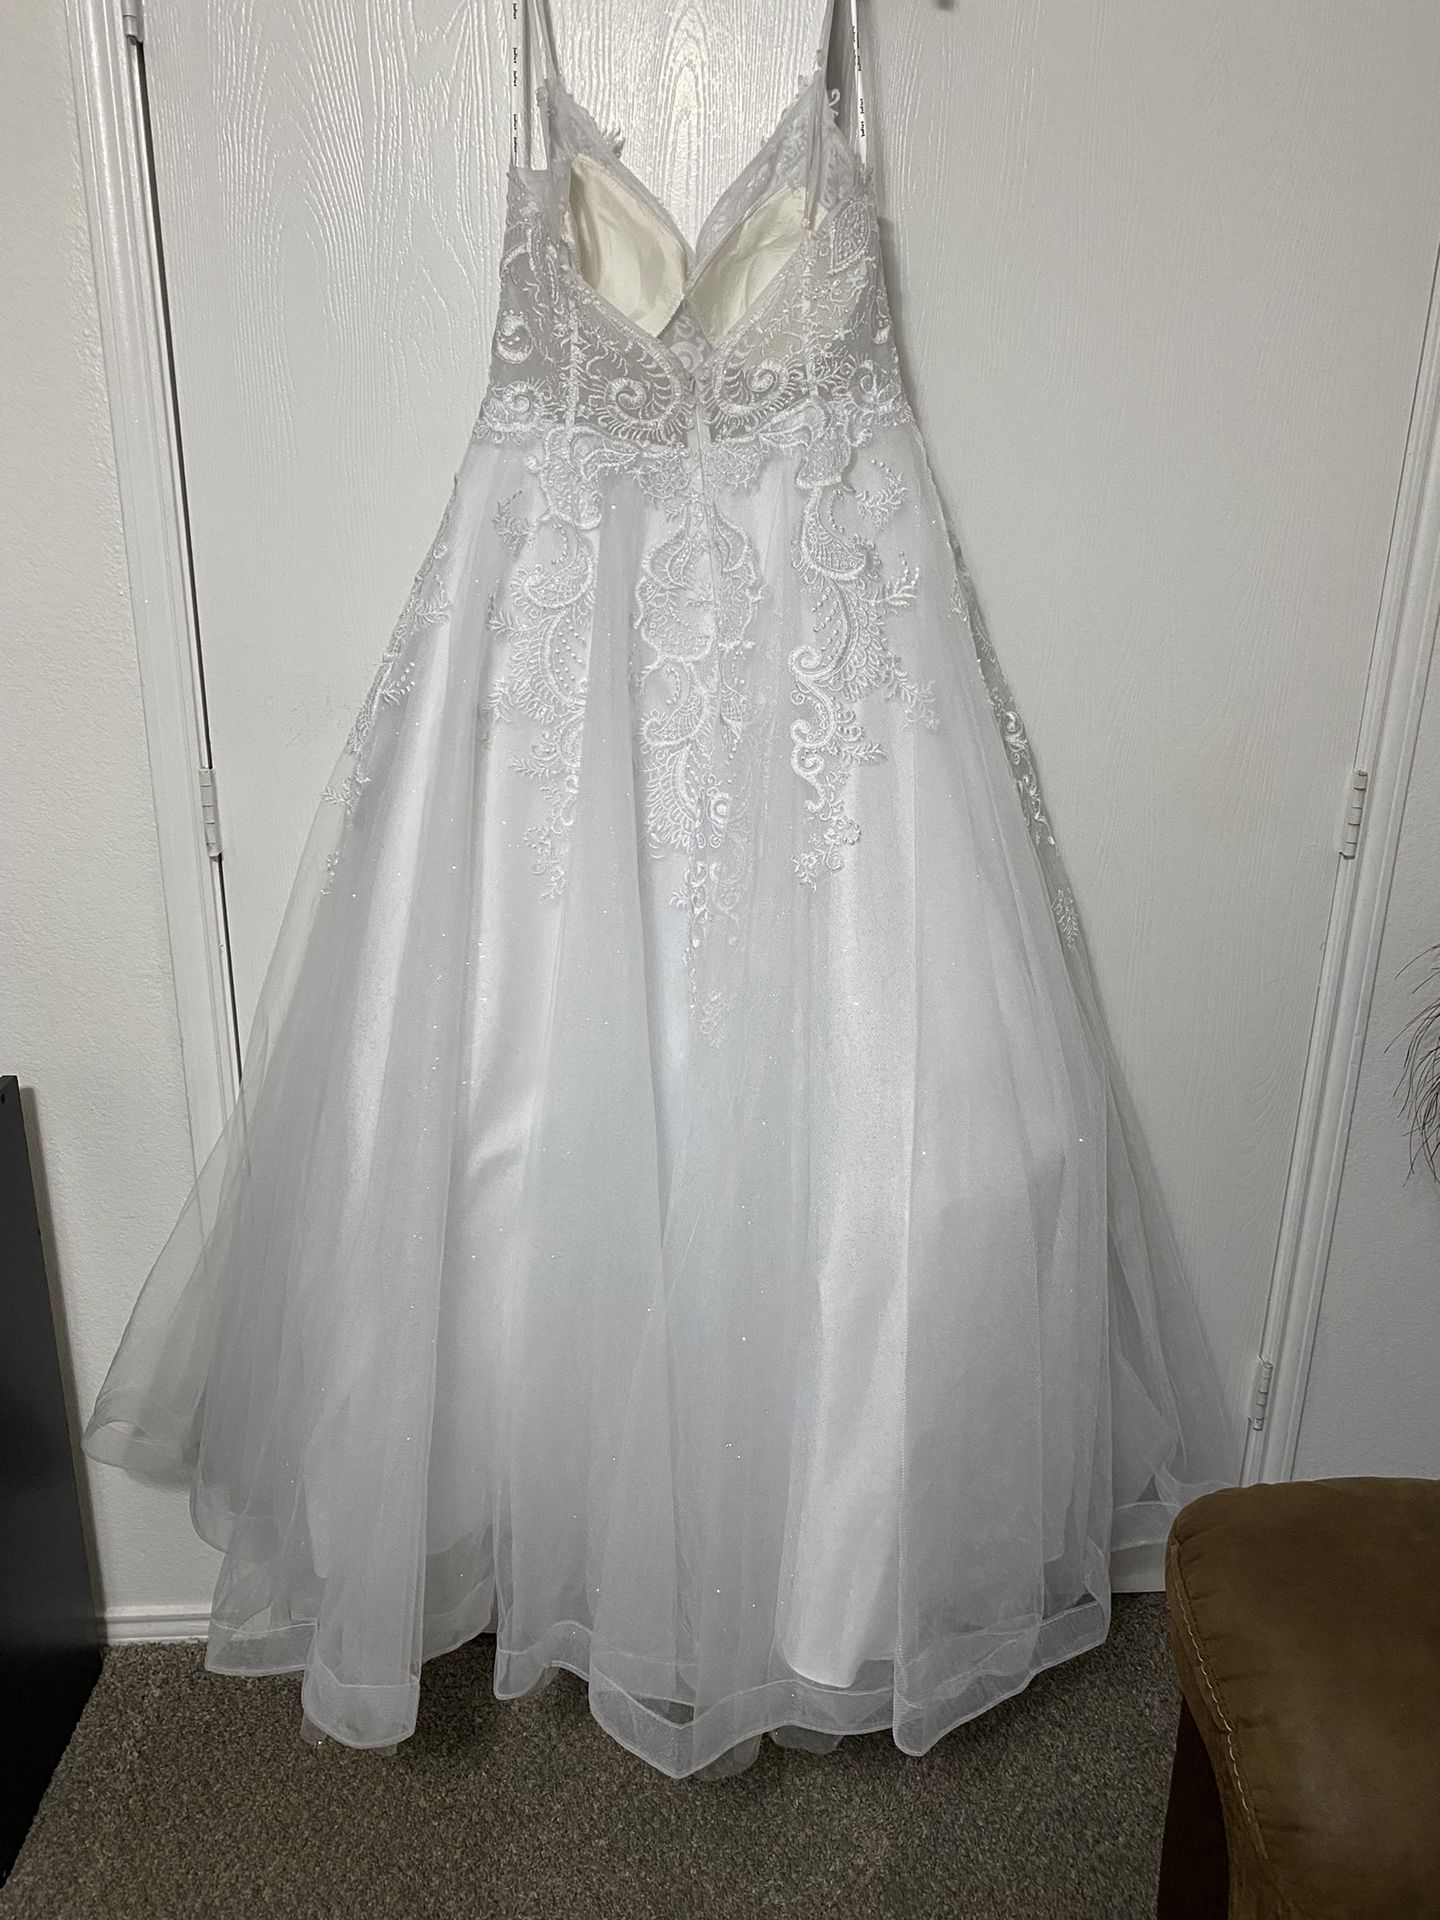 White Wedding Dress, XL